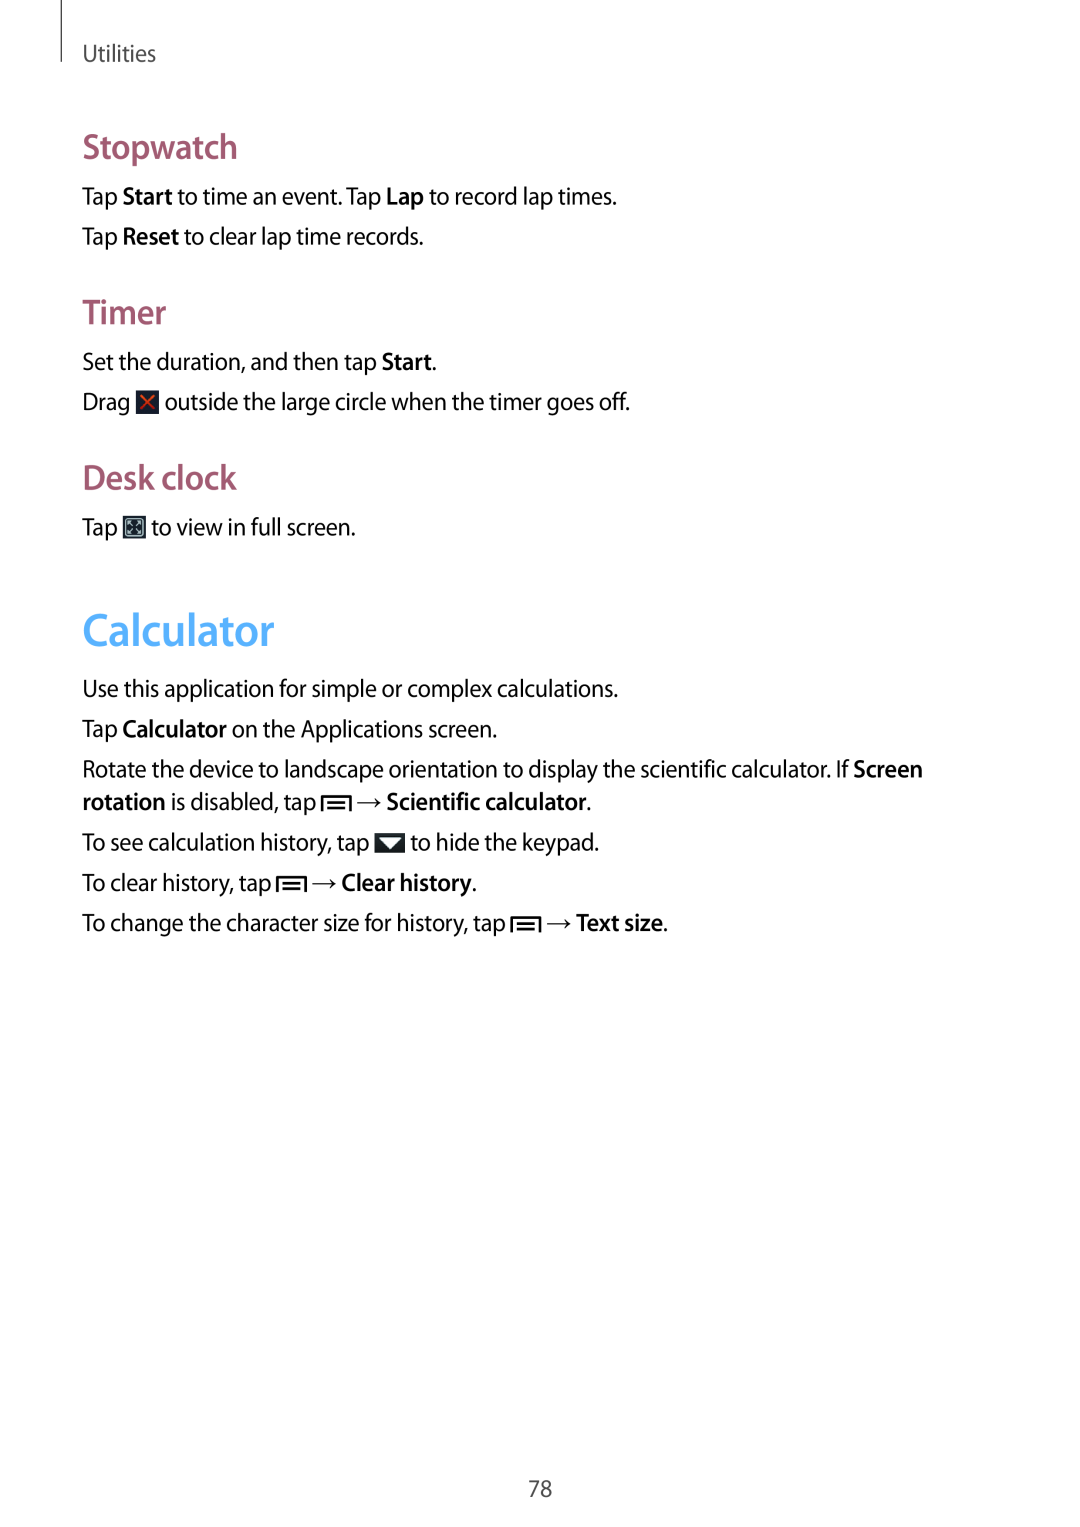 Samsung GT-S6810MBNTUR manual Calculator, Stopwatch, Timer, Desk clock, →Scientific calculator, →Clear history, Utilities 